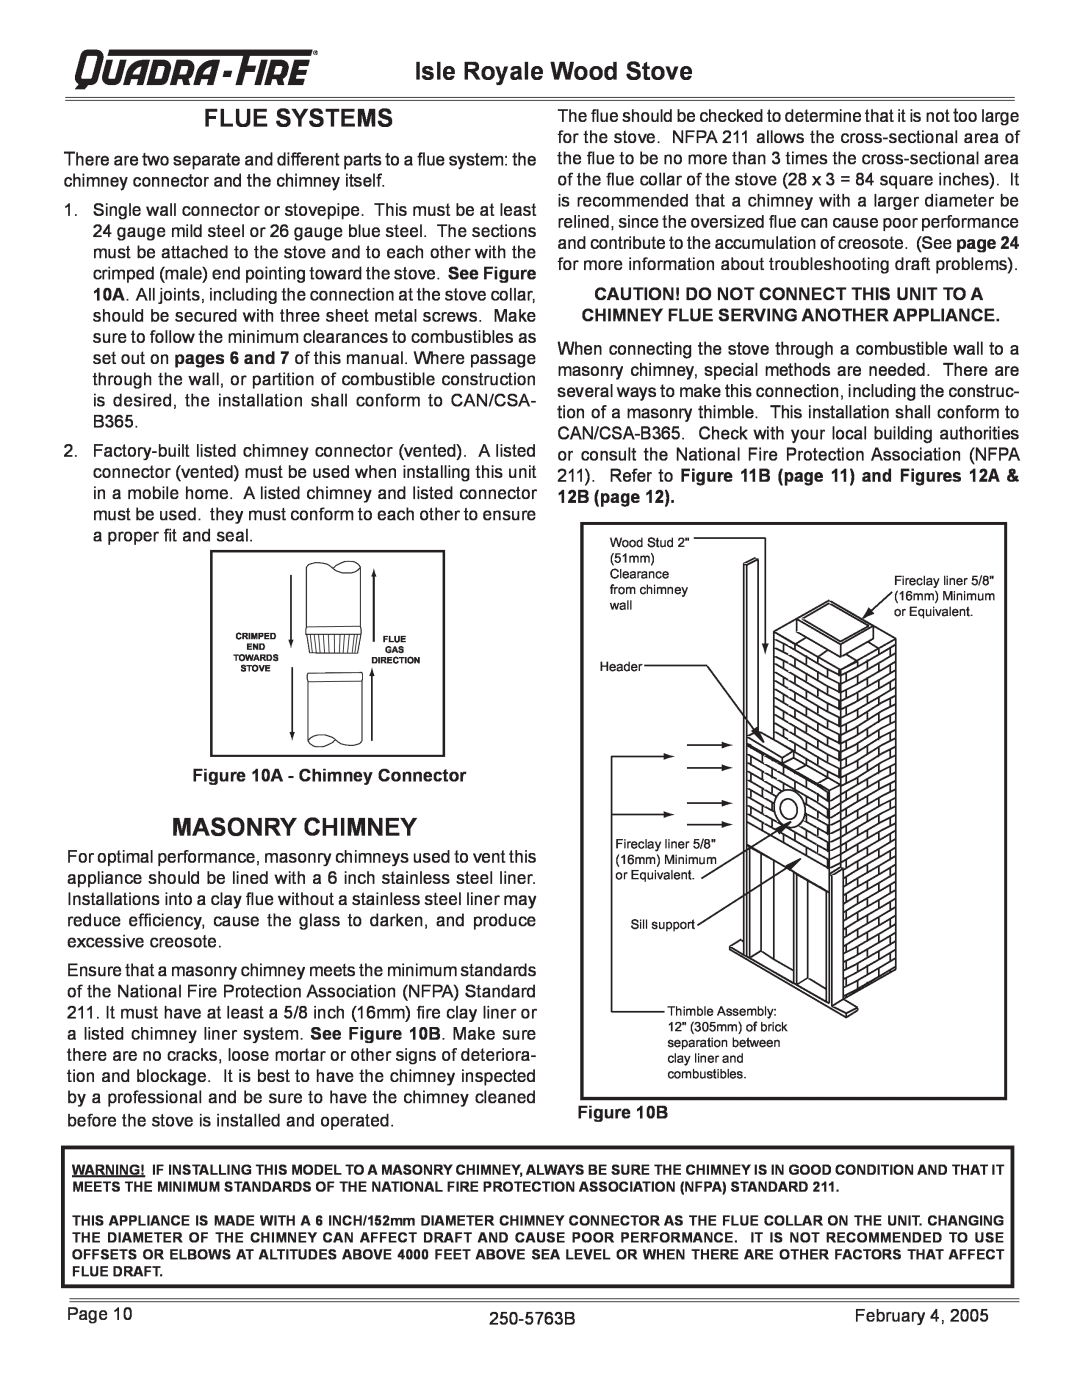 Quadra-Fire installation instructions Flue Systems, Masonry Chimney, Isle Royale Wood Stove, A - Chimney Connector, B 